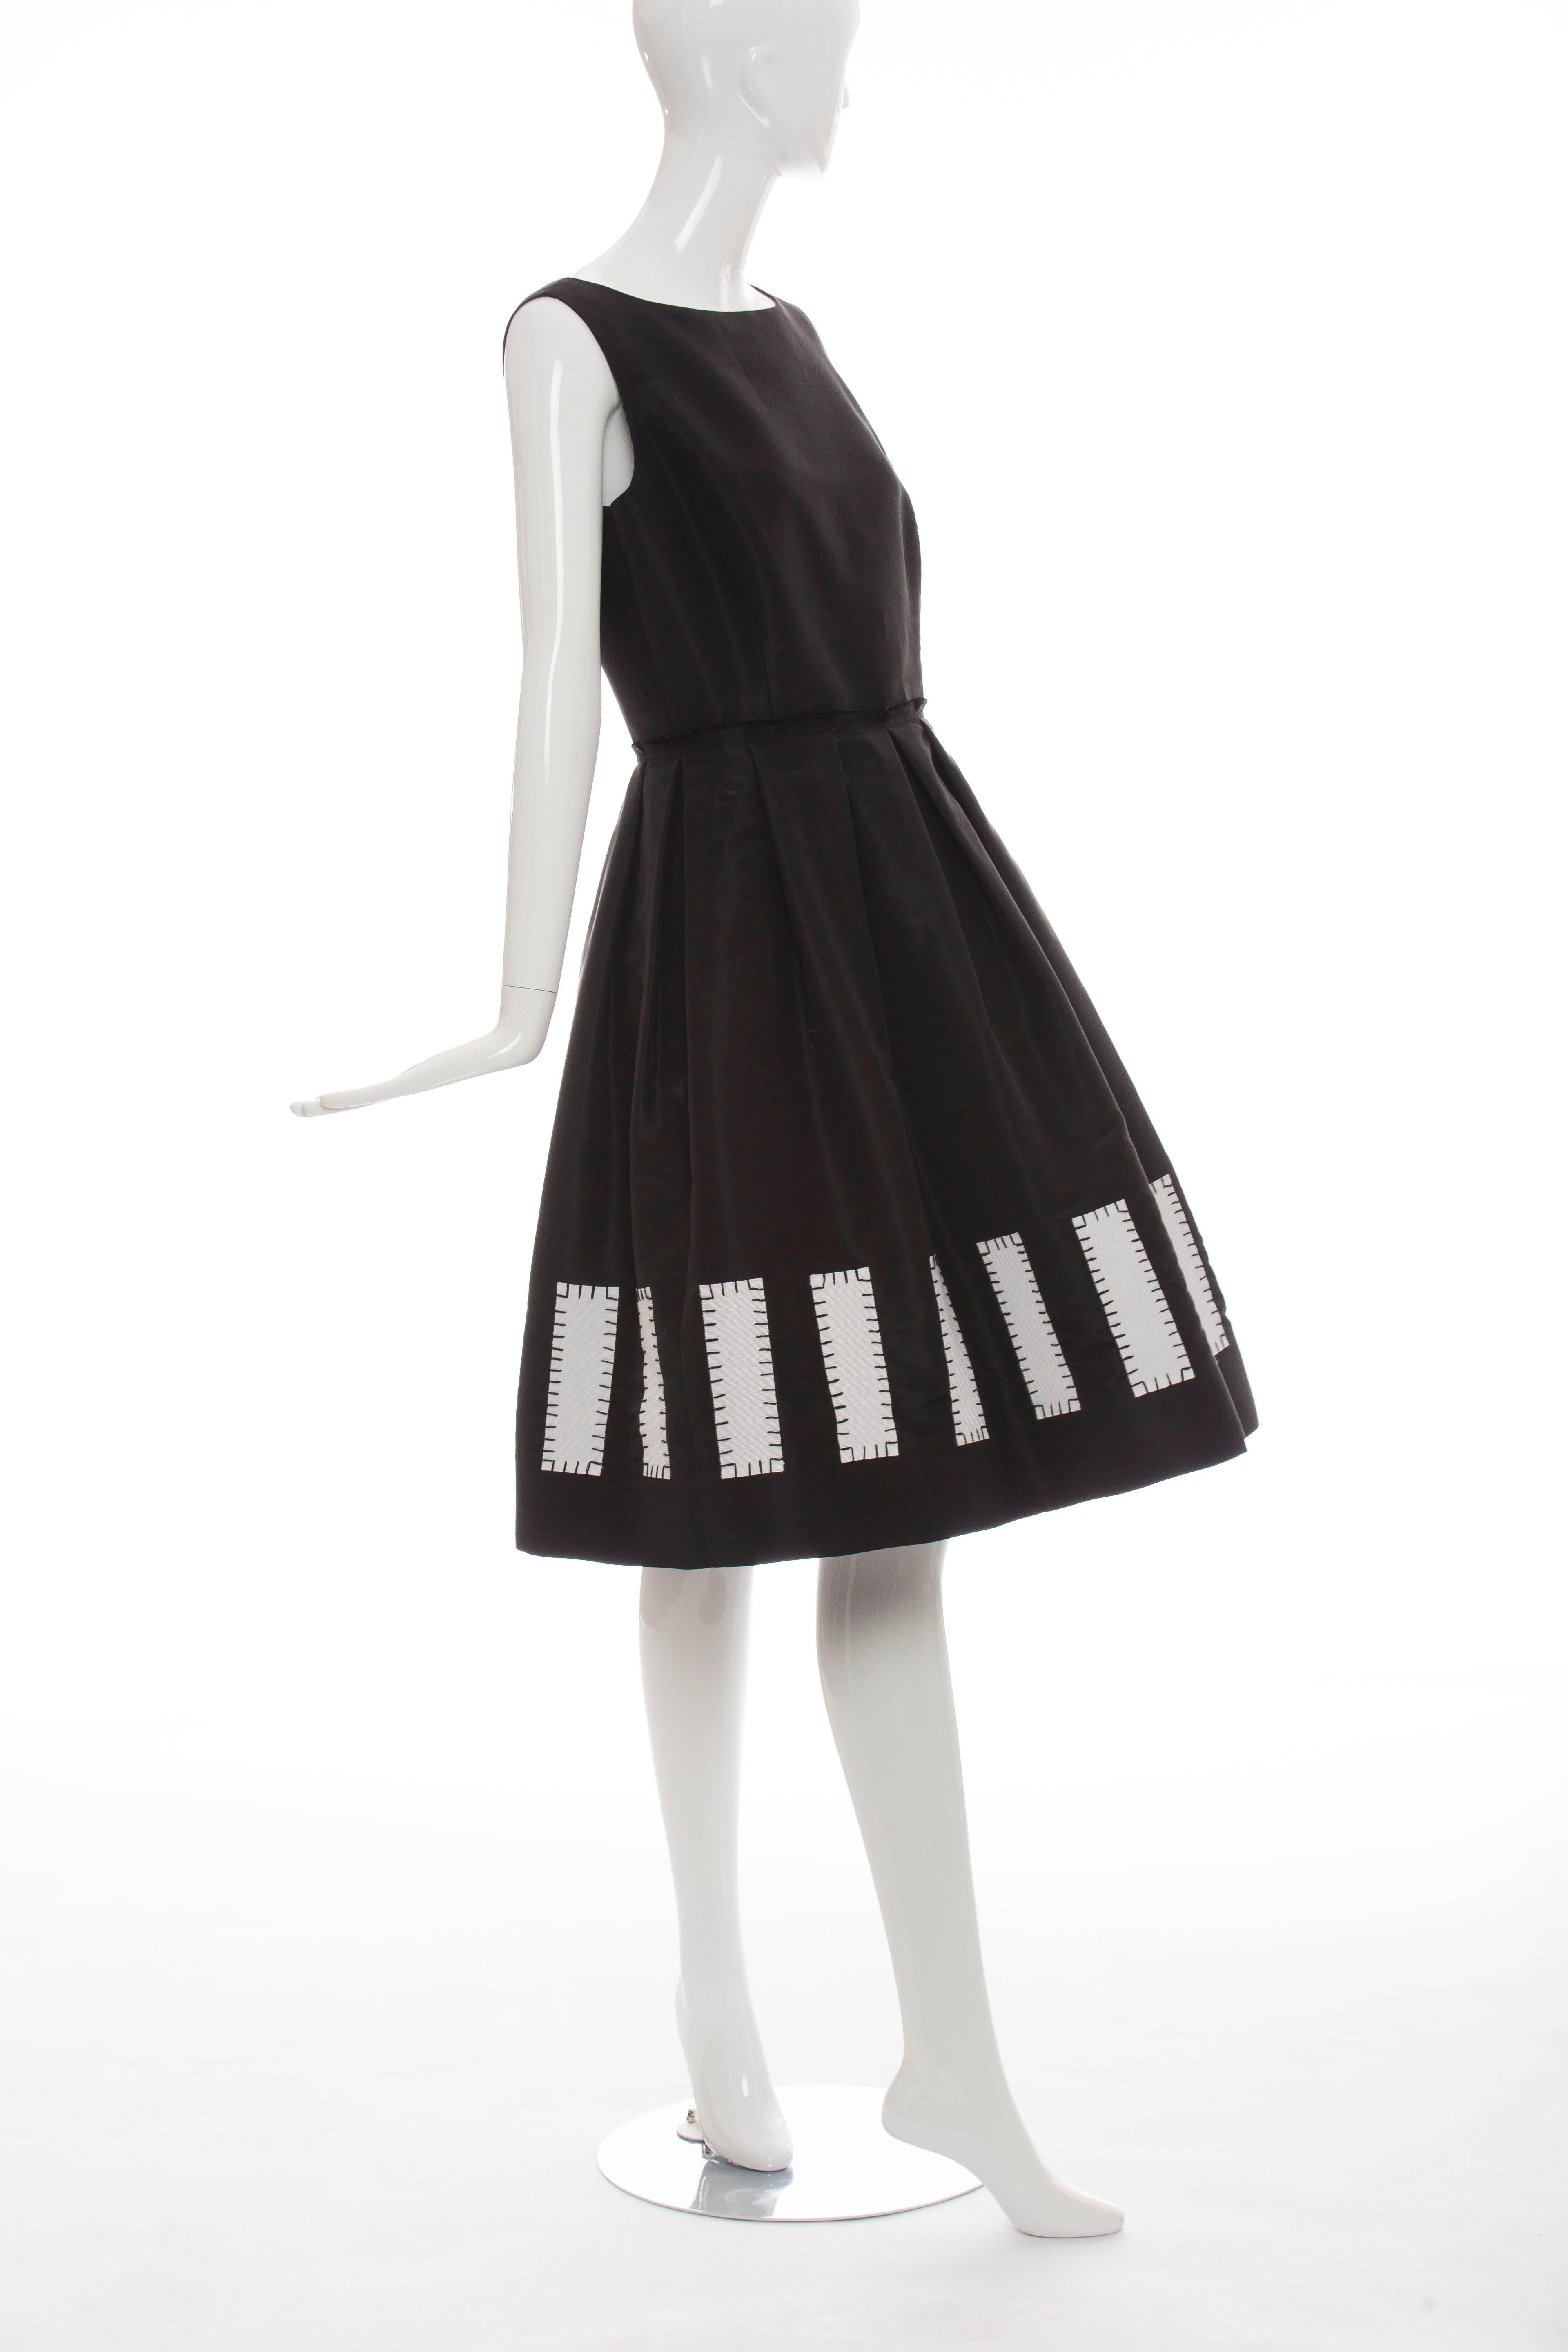 Oscar De la Renta Runway Sleeveless Black Silk Faille Dress, Spring 2006 In Excellent Condition For Sale In Cincinnati, OH